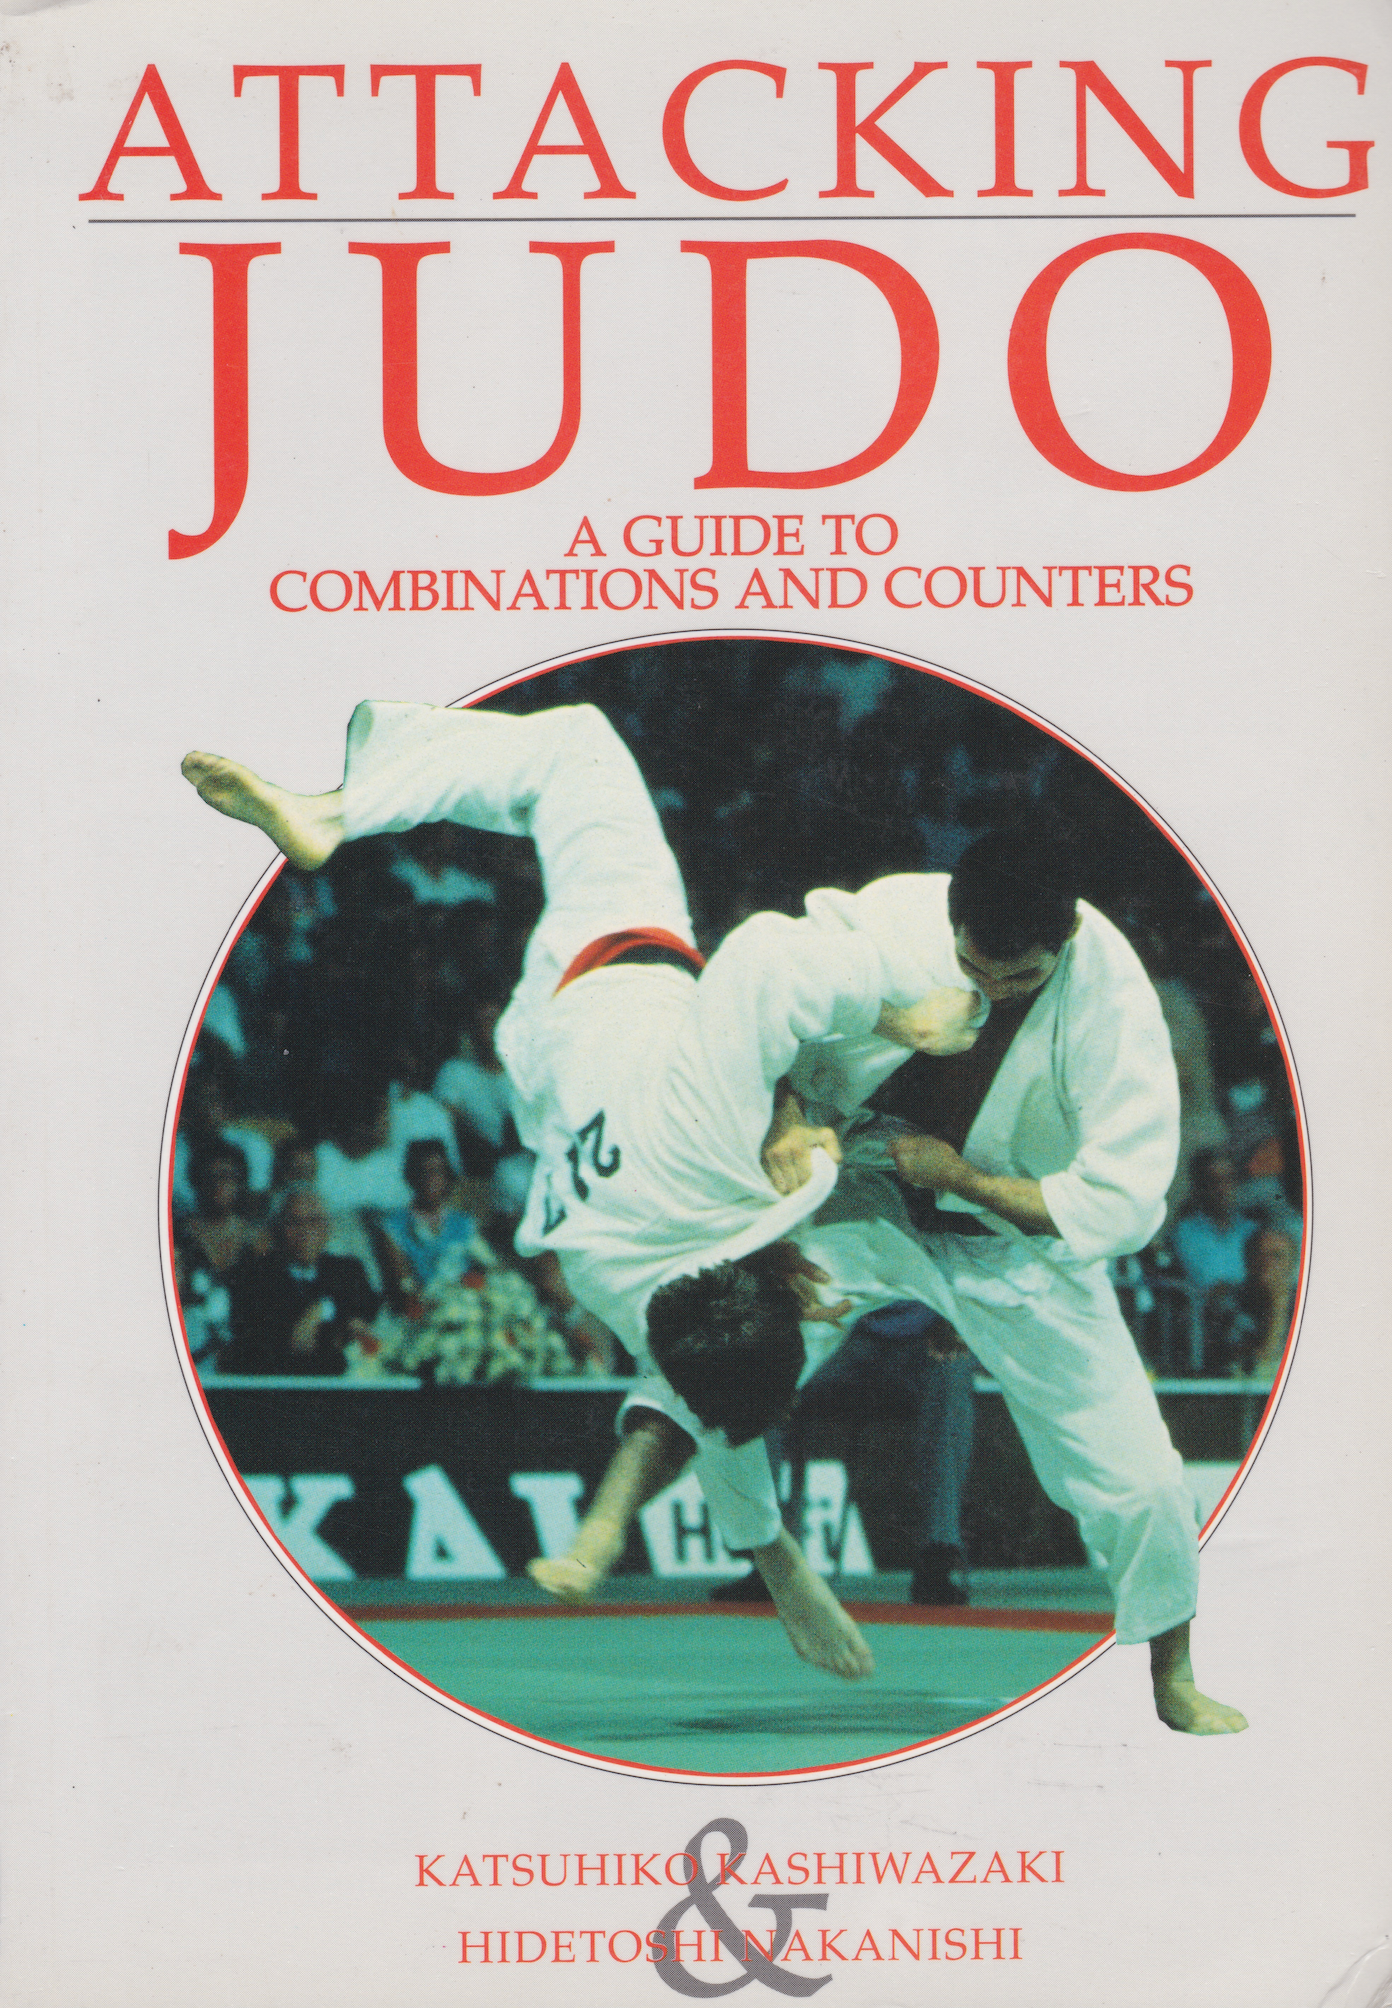 Attacking Judo: A Guide to Combinations and Counters by Katsuhiko Kashiwazaki & Hidetoshi Nakanishi (Preowned)